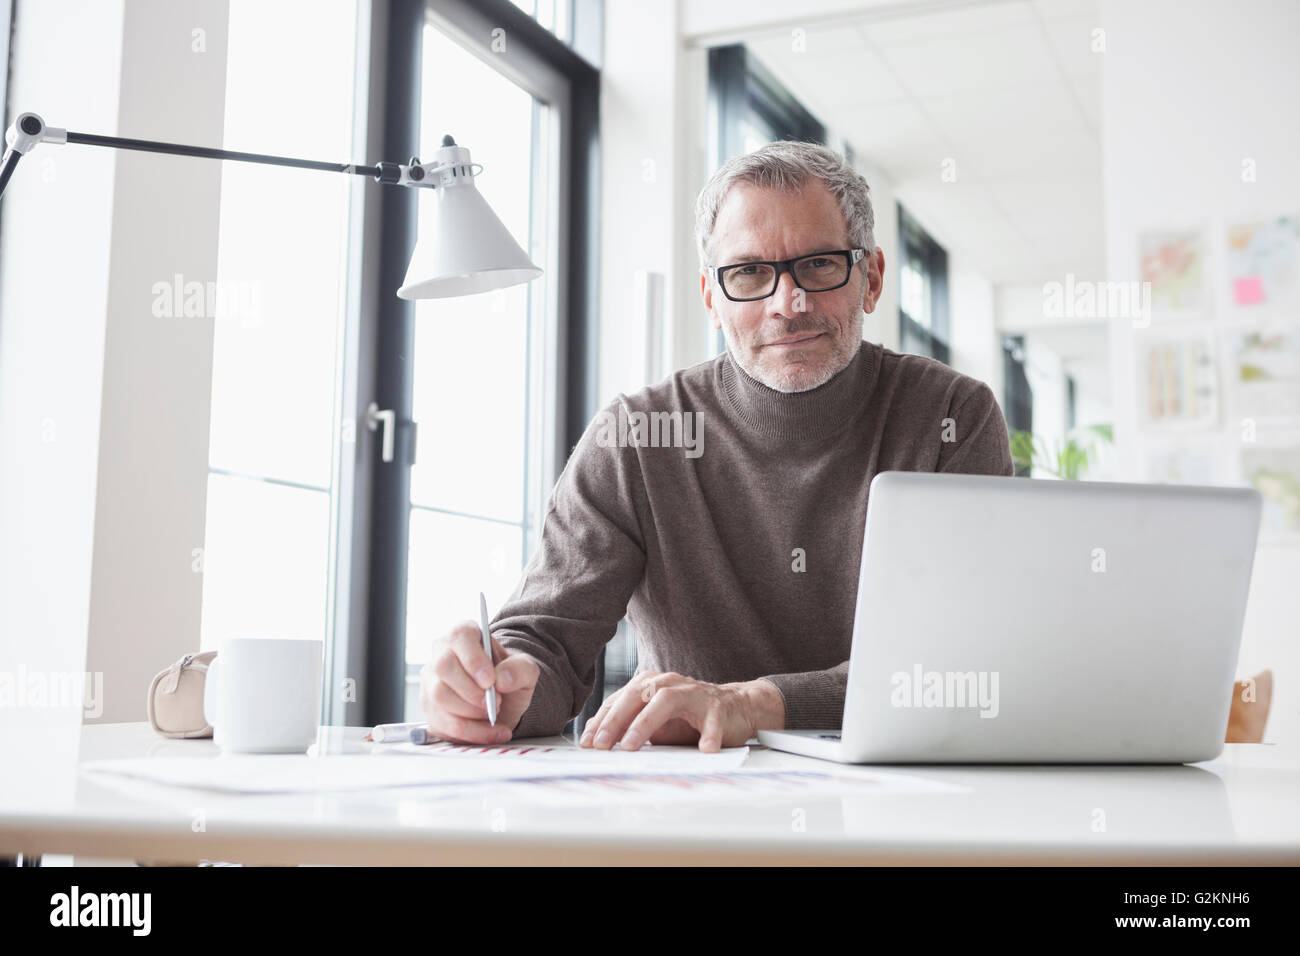 Mature man sitting in office using laptop Stock Photo